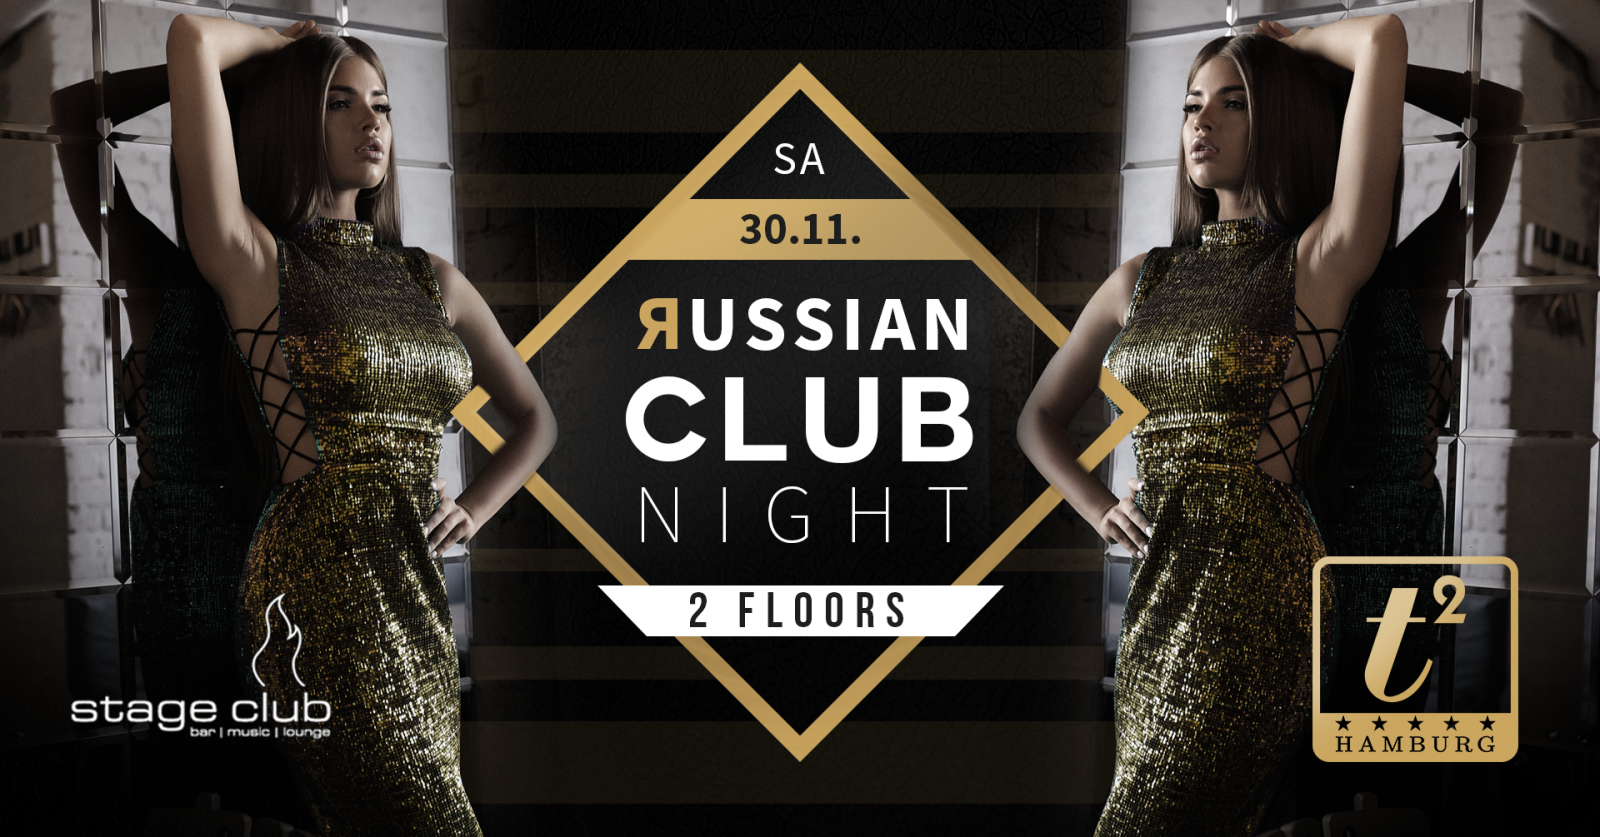 T2 Russian Club night #3 at stage club